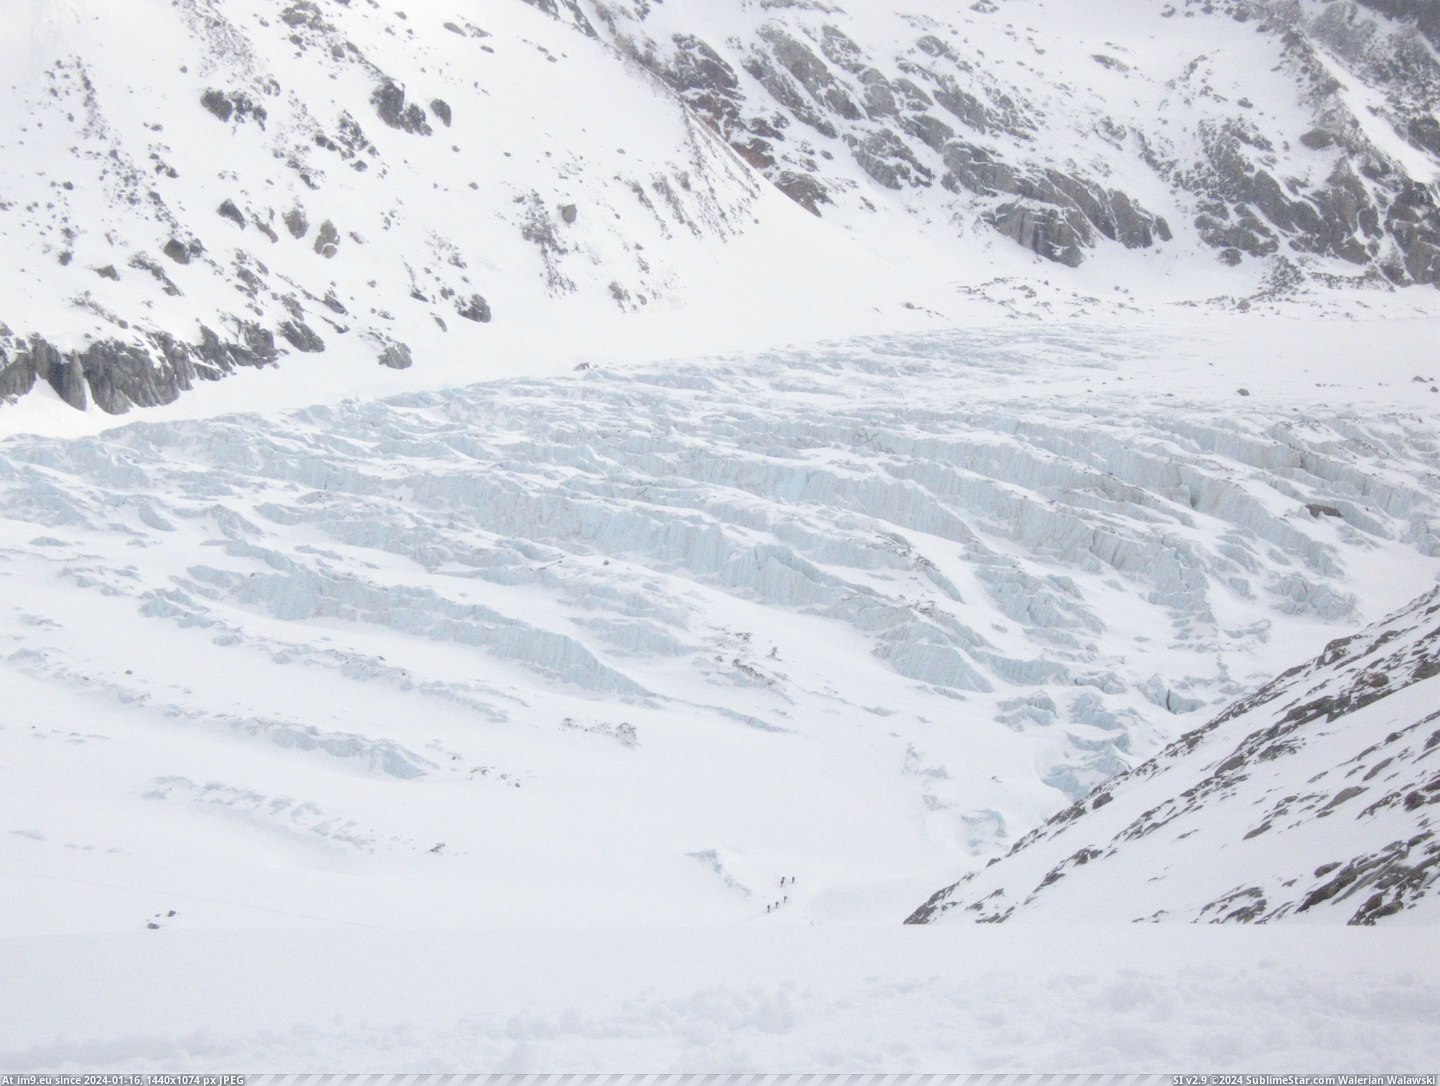 #For #Scale #Glacier #Hikers #Chamonix #Mer #Glace #France #3072x2304 #Zoom [Earthporn] Mer de Glace - Glacier in Chamonix, France. Zoom in on the hikers for scale. [3072x2304] Pic. (Obraz z album My r/EARTHPORN favs))